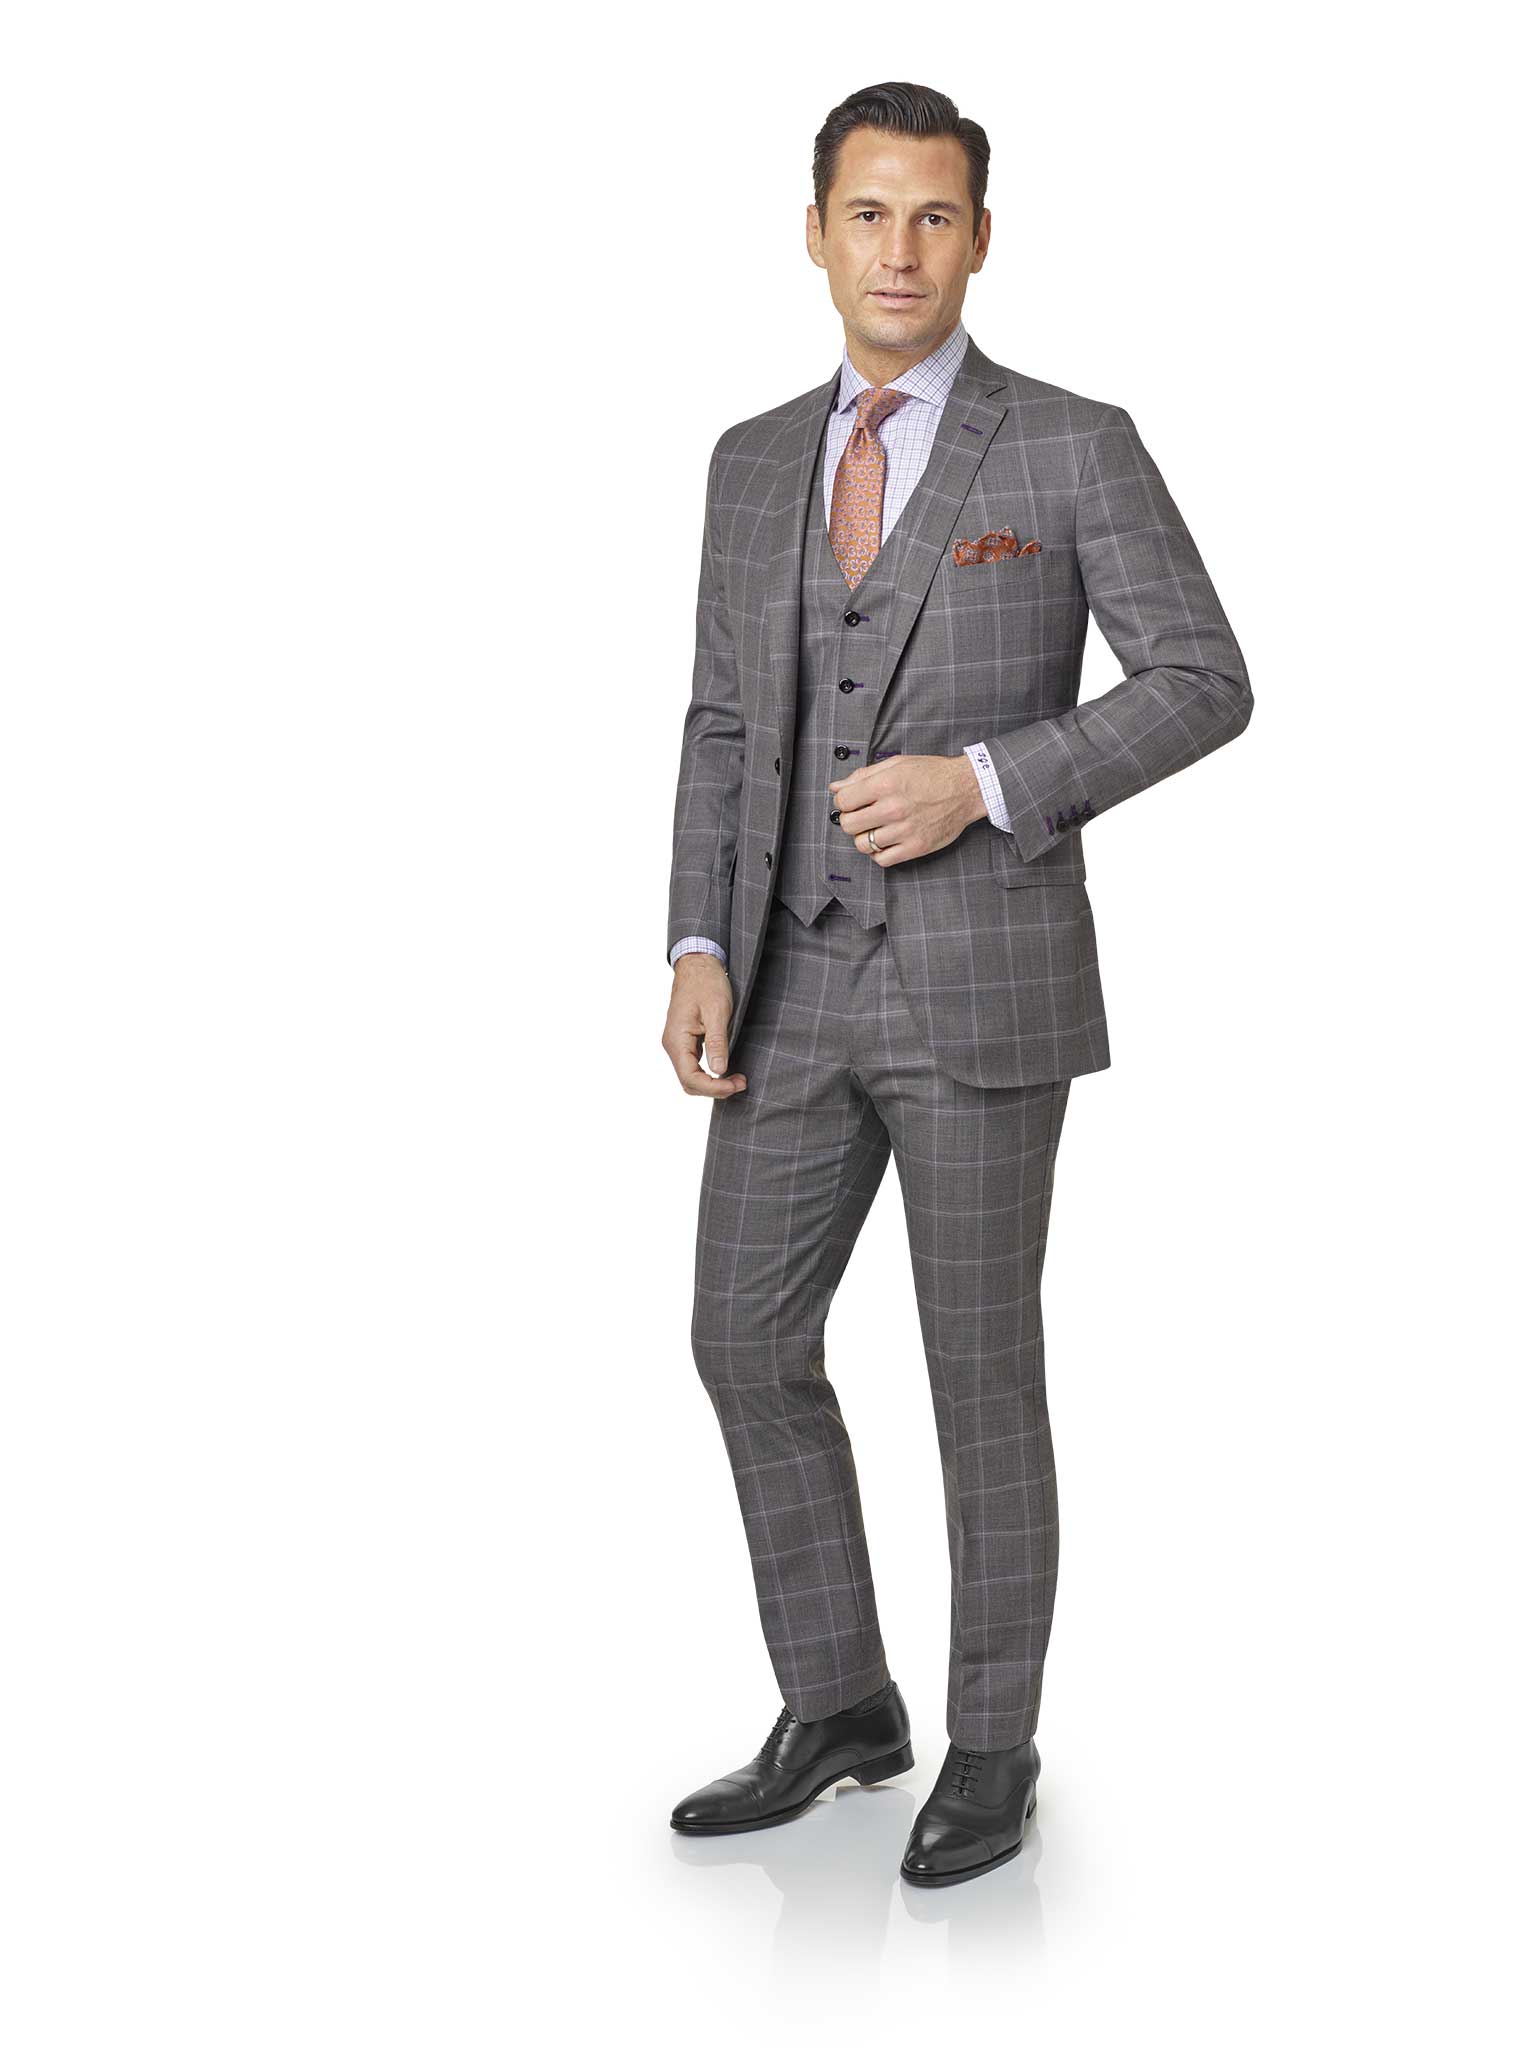 Men's Custom Suits                                                                                                                                                                                                                                        , Gray Windowpane Suit